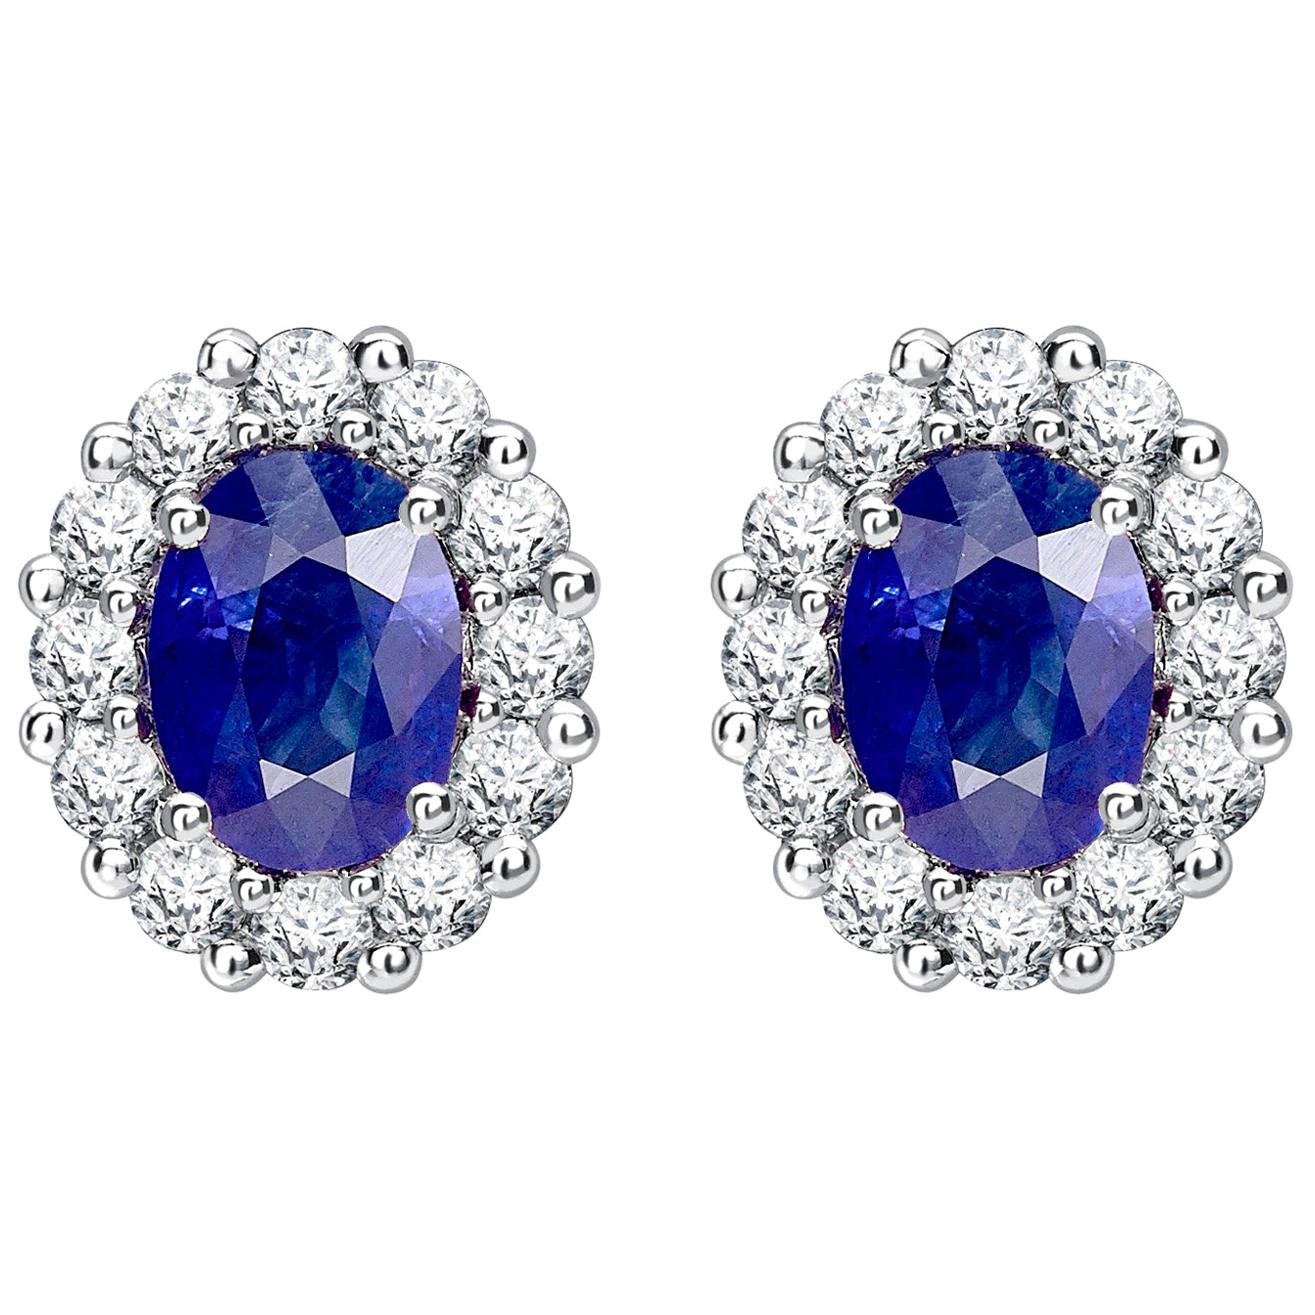 Garrard '1735' Platinum GIA Certified Oval Blue Sapphire Diamond Cluster Studs